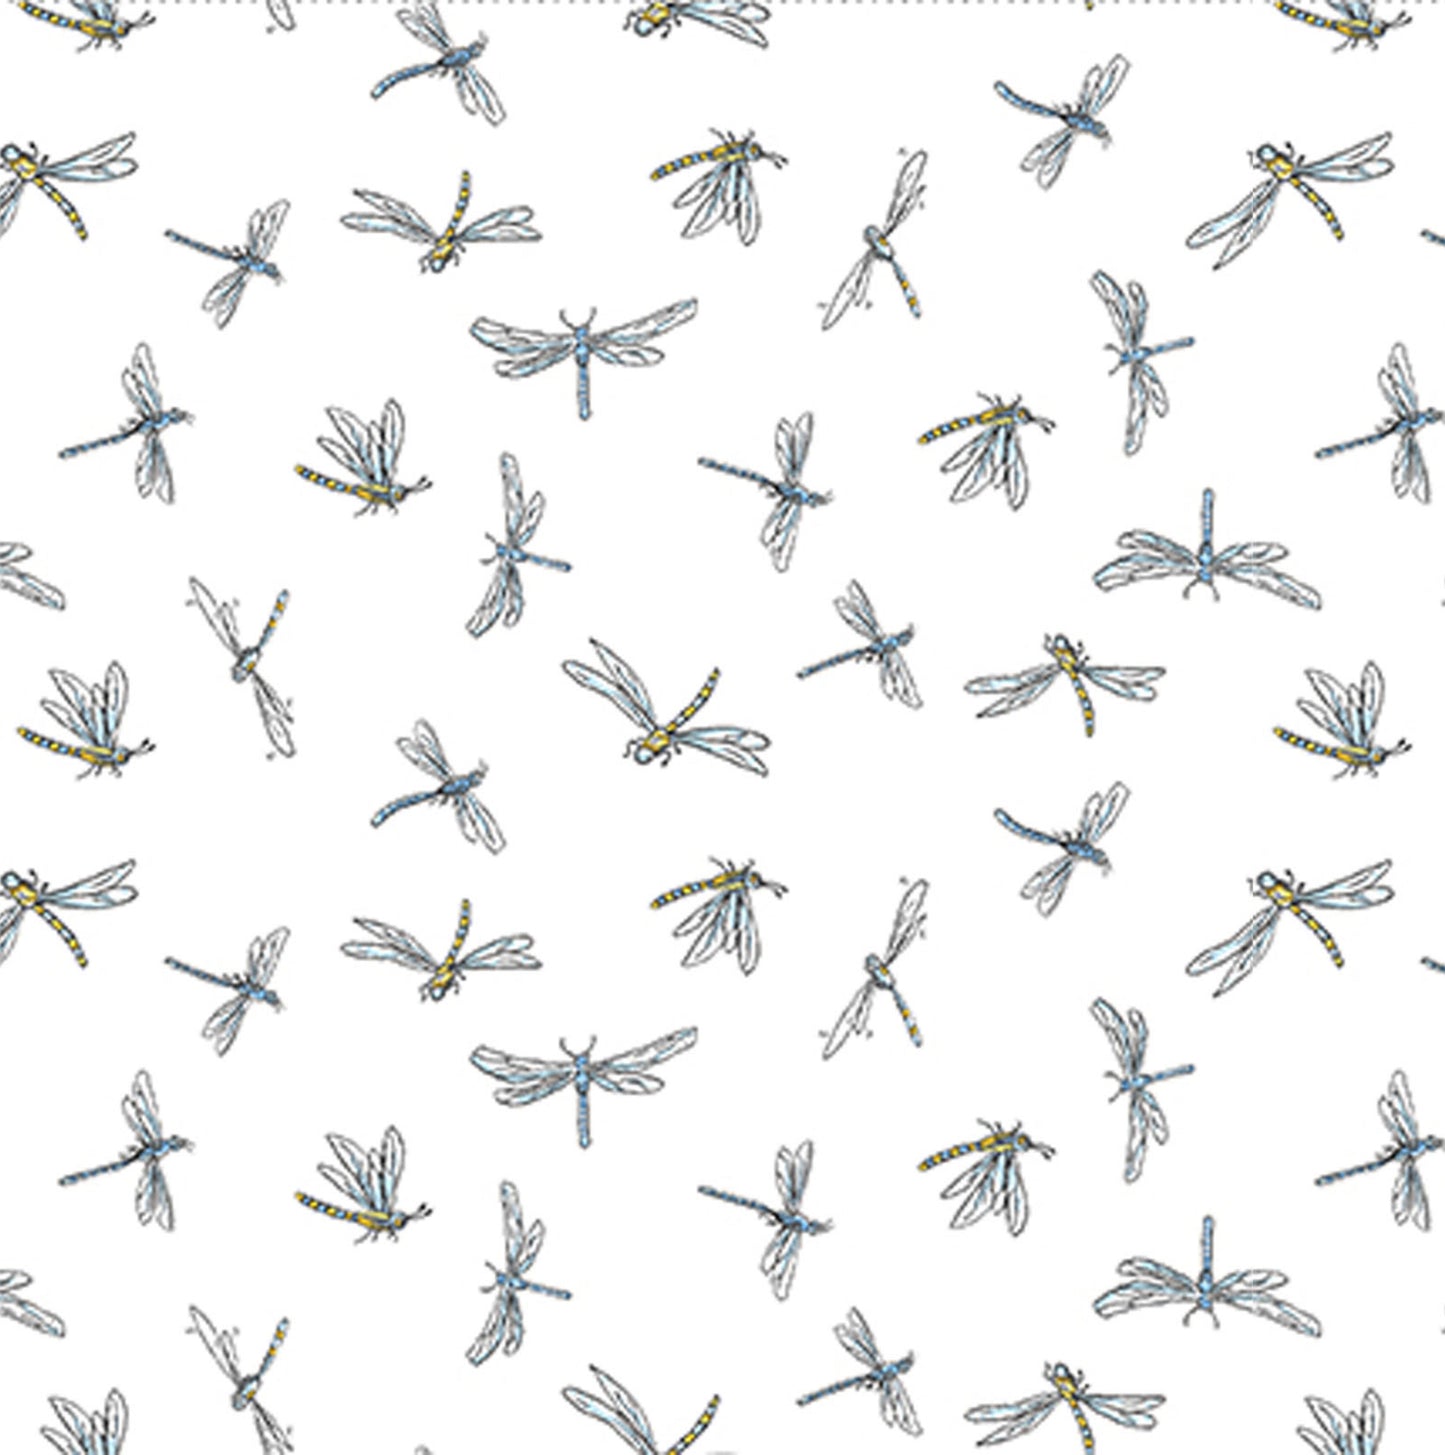 LEAP FROG - Dragonflies White - by Anita Jarem, 100% Cotton, Toad Hollow Fabrics